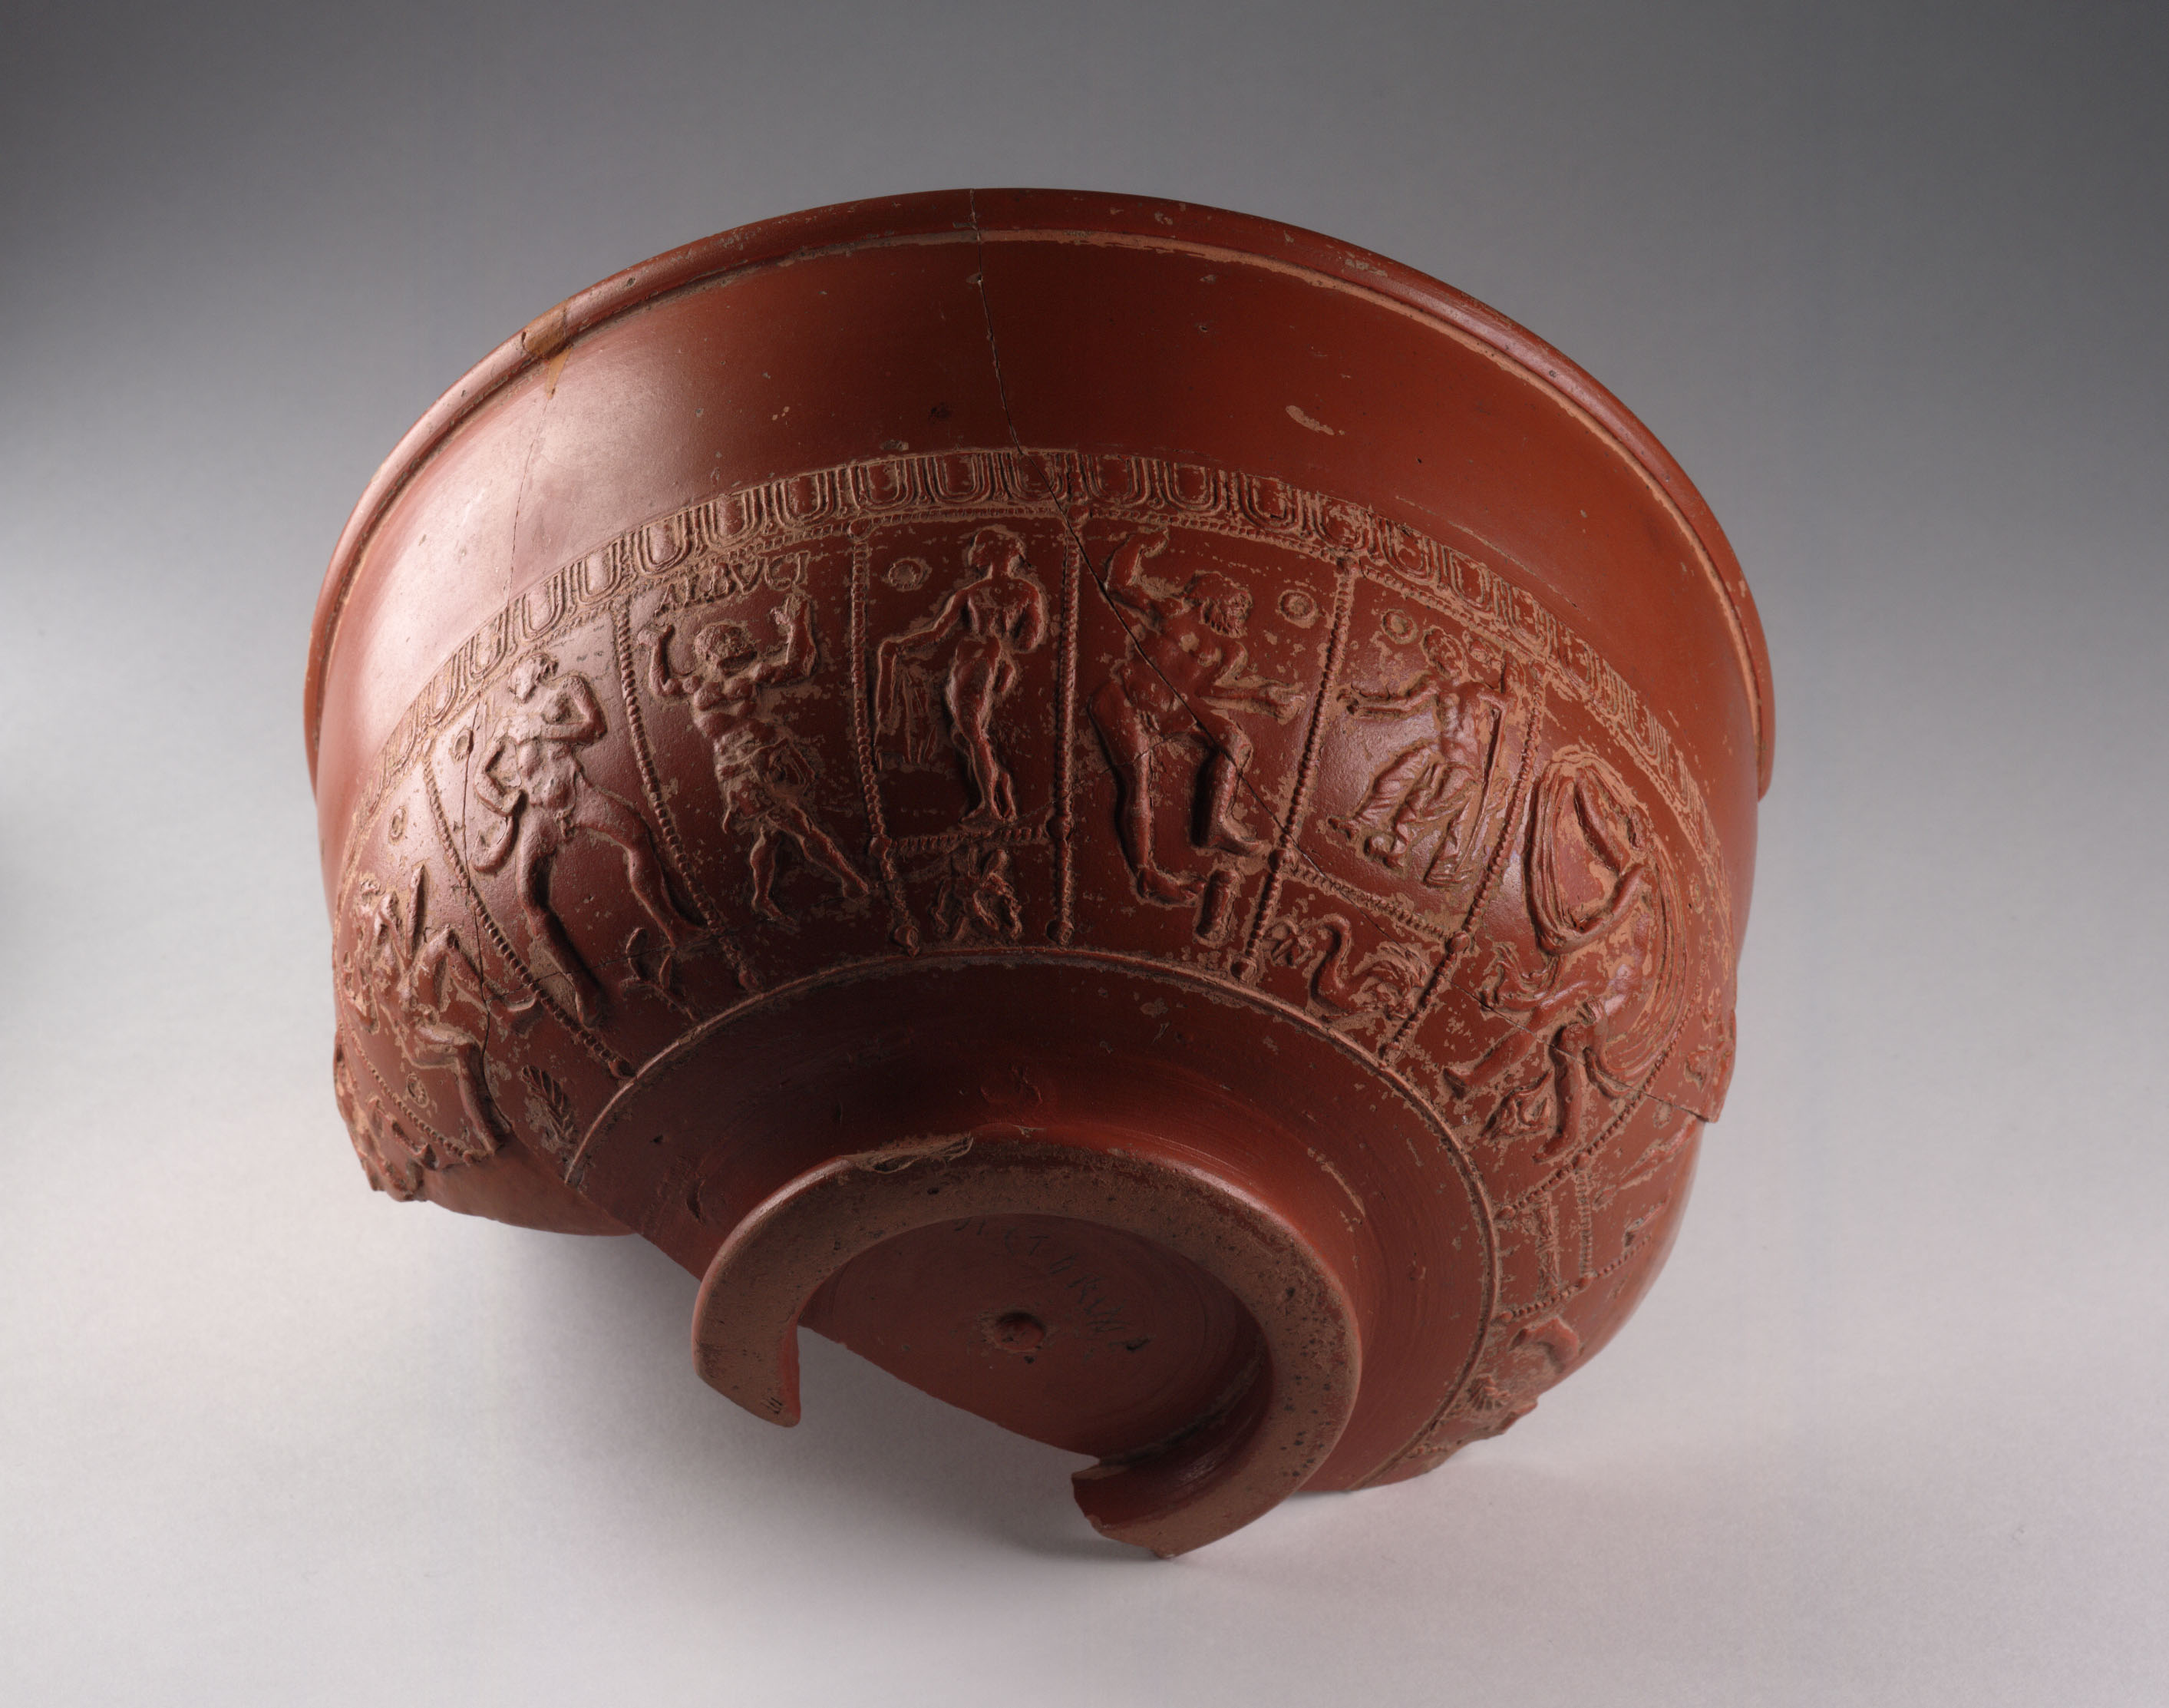 Roman bowl from Inveresk